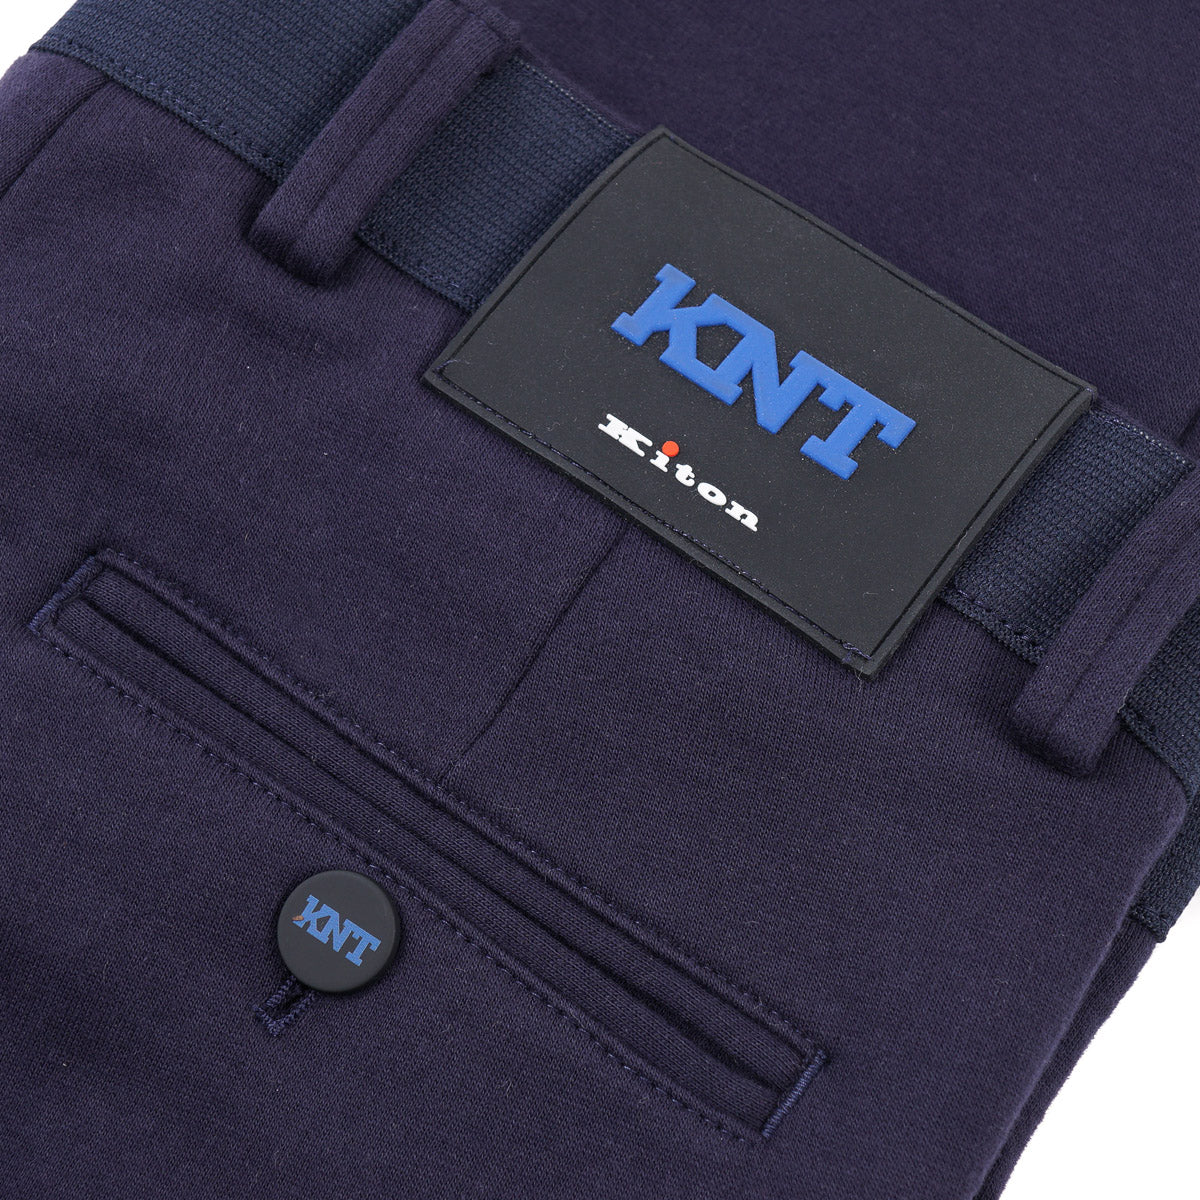 Kiton KNT Jersey Cotton Chino Pants - Top Shelf Apparel